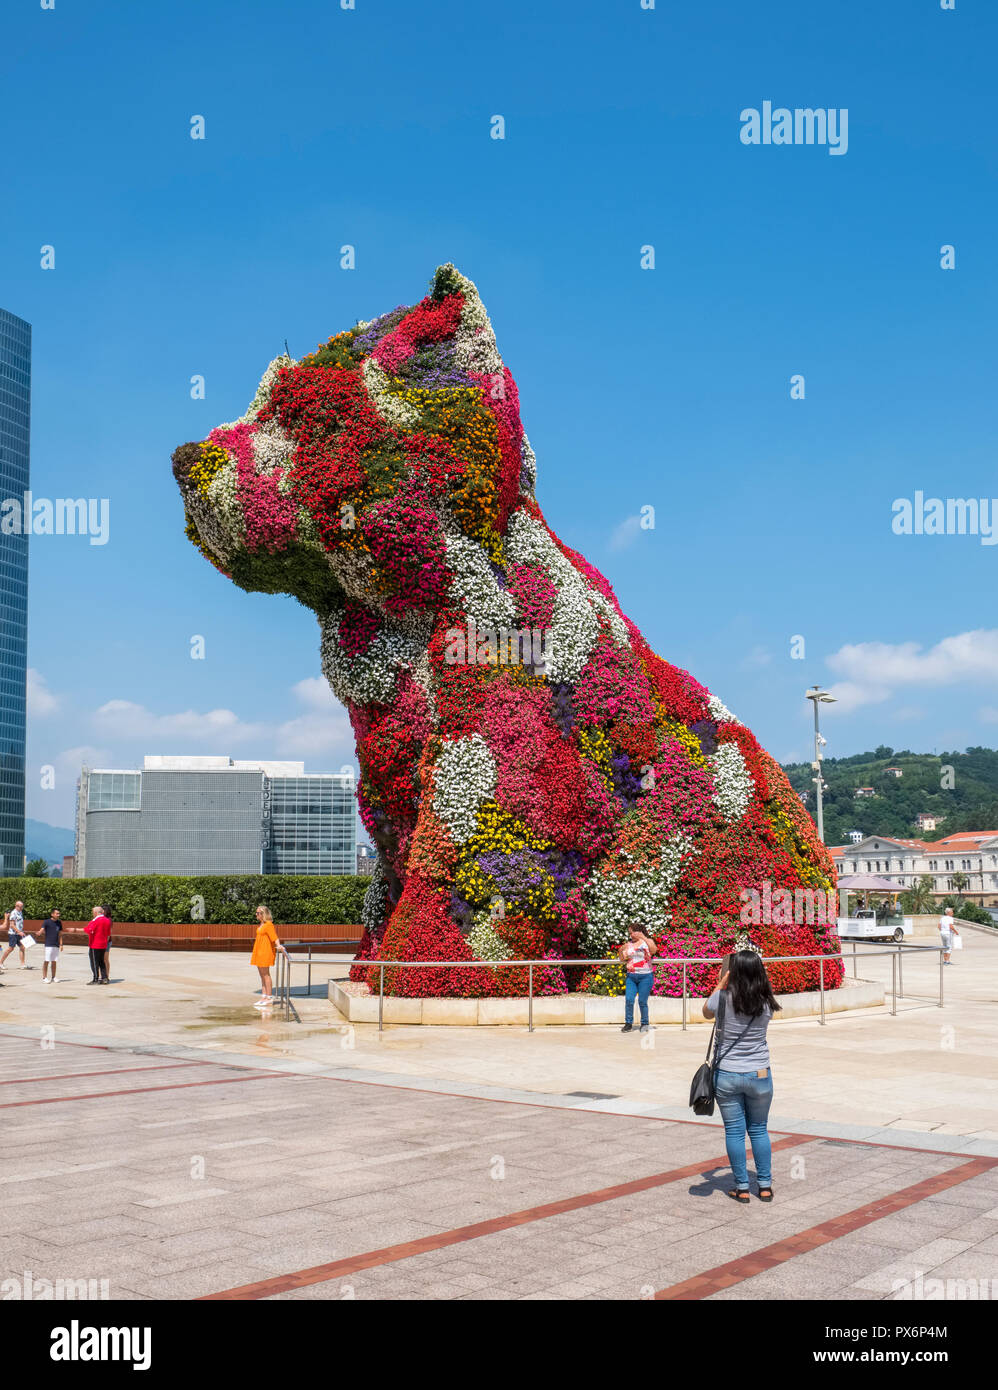 Welpen, eine Blume Kunst Skulptur von Jeff Koons in Bilbao, Spanien, Europa Stockfoto